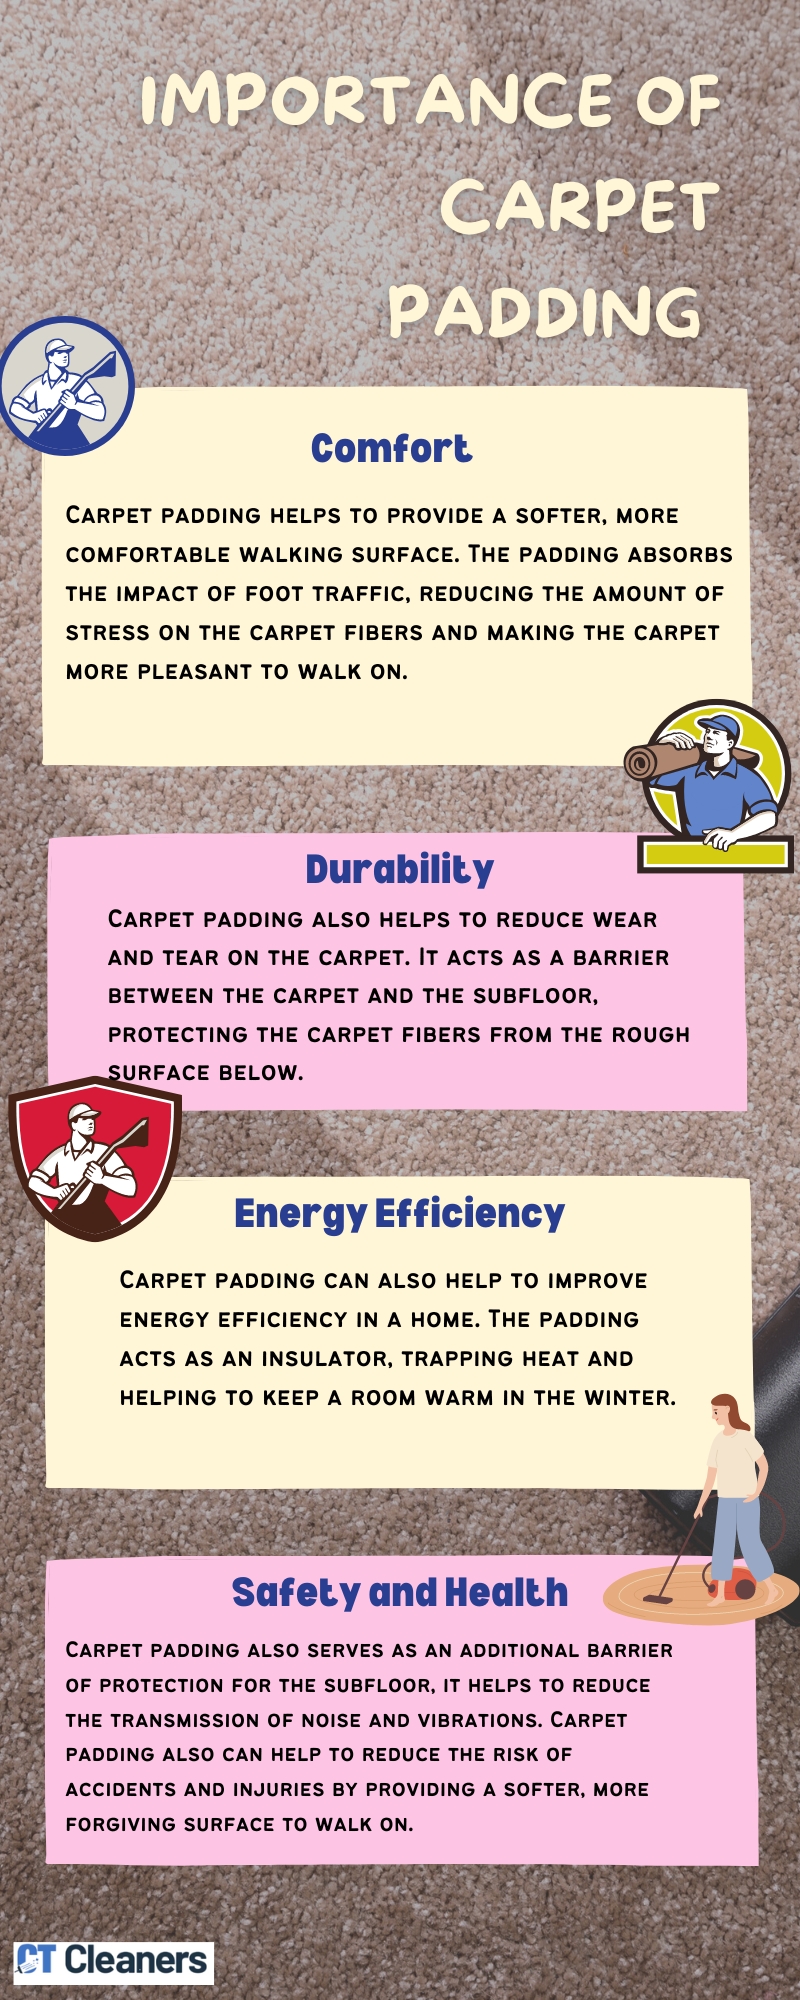 Importance of carpet padding 